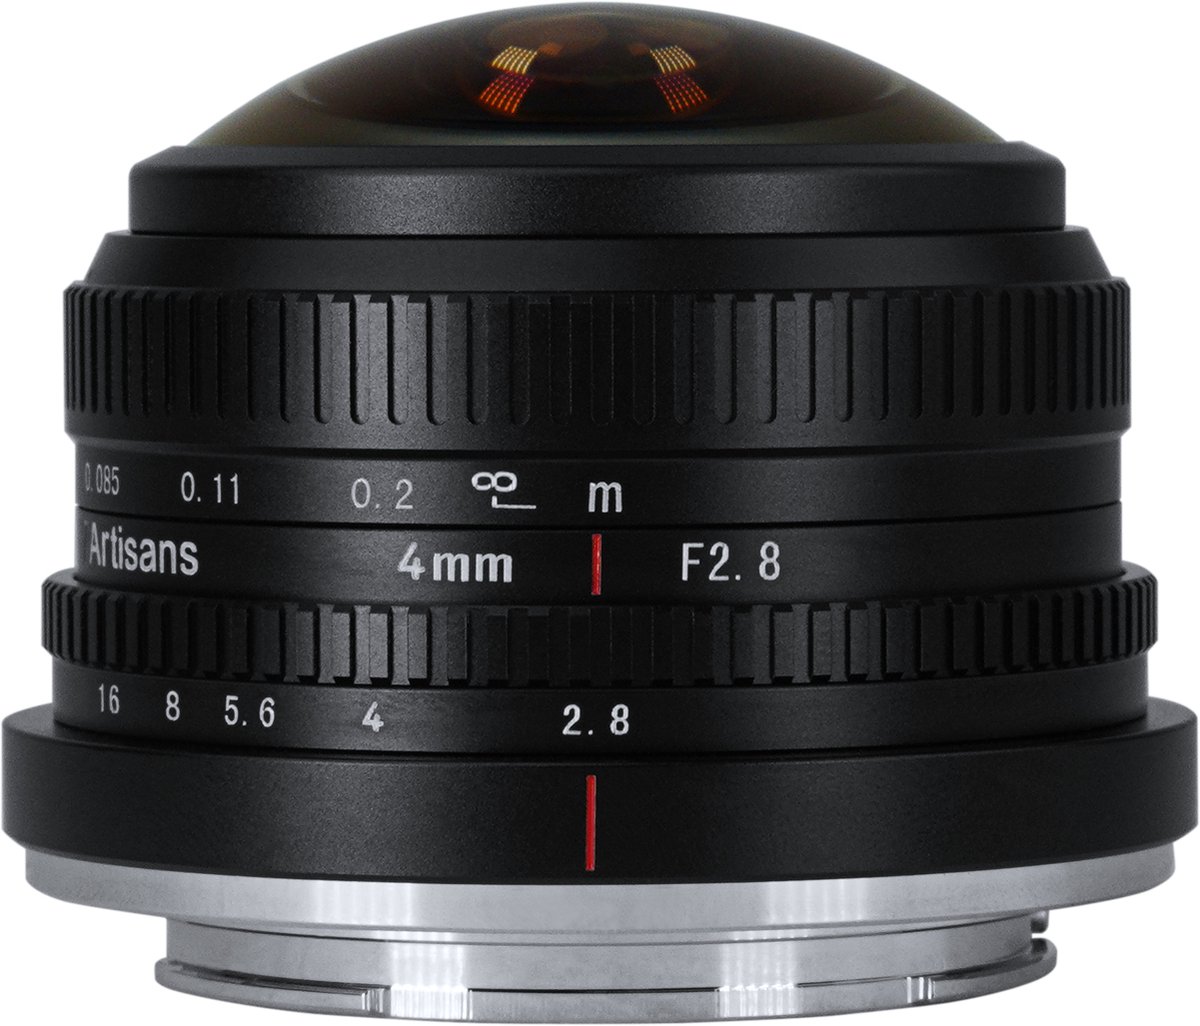 7artisans - Cameralens - 4mm F2.8 APS-C voor Fuji Fx-vatting